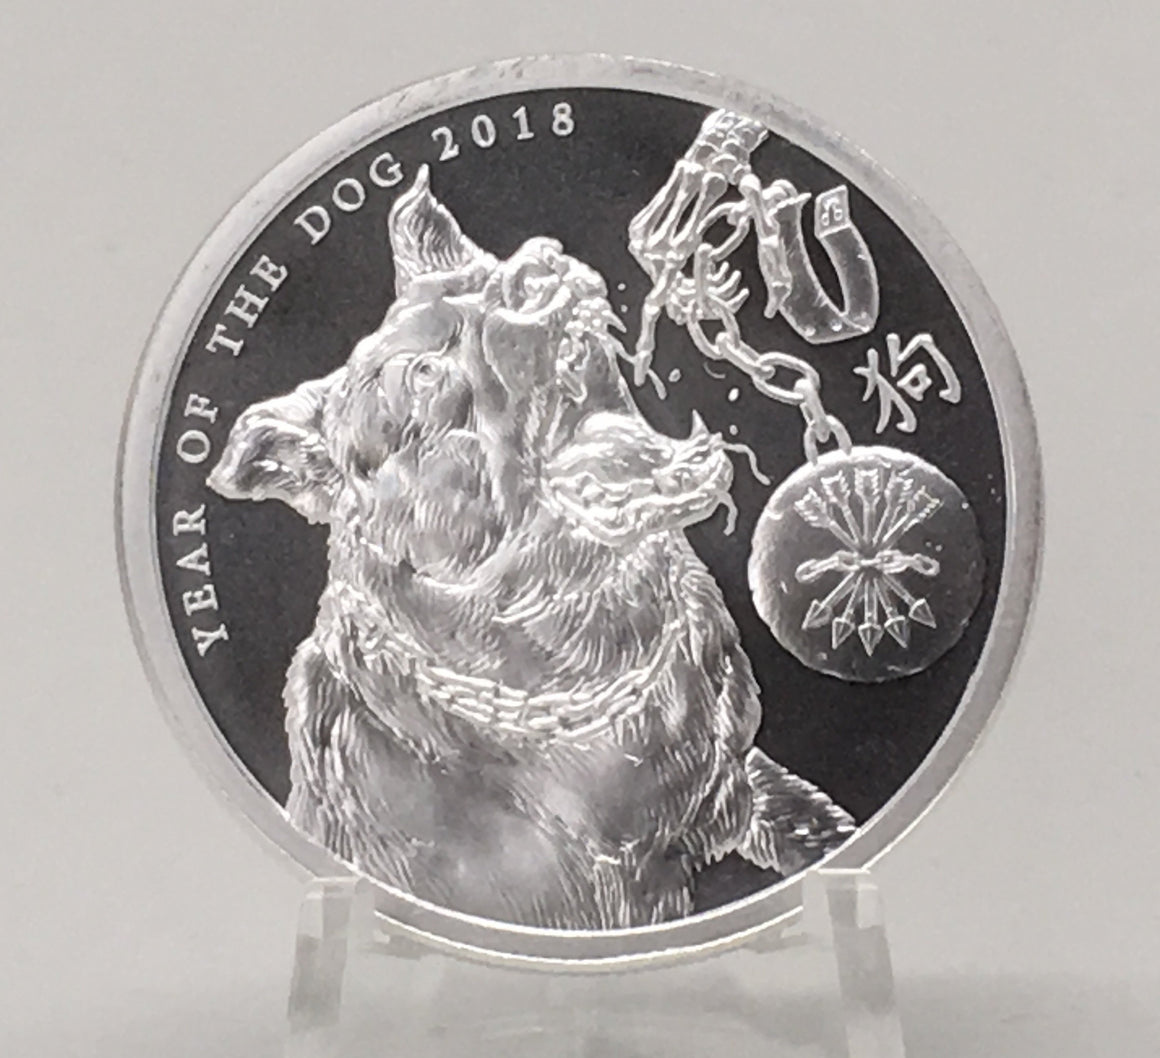 2018 Year of the Dog V1 by Silver Shield, Mini Mintage - BU 1 oz .999 Silver Round